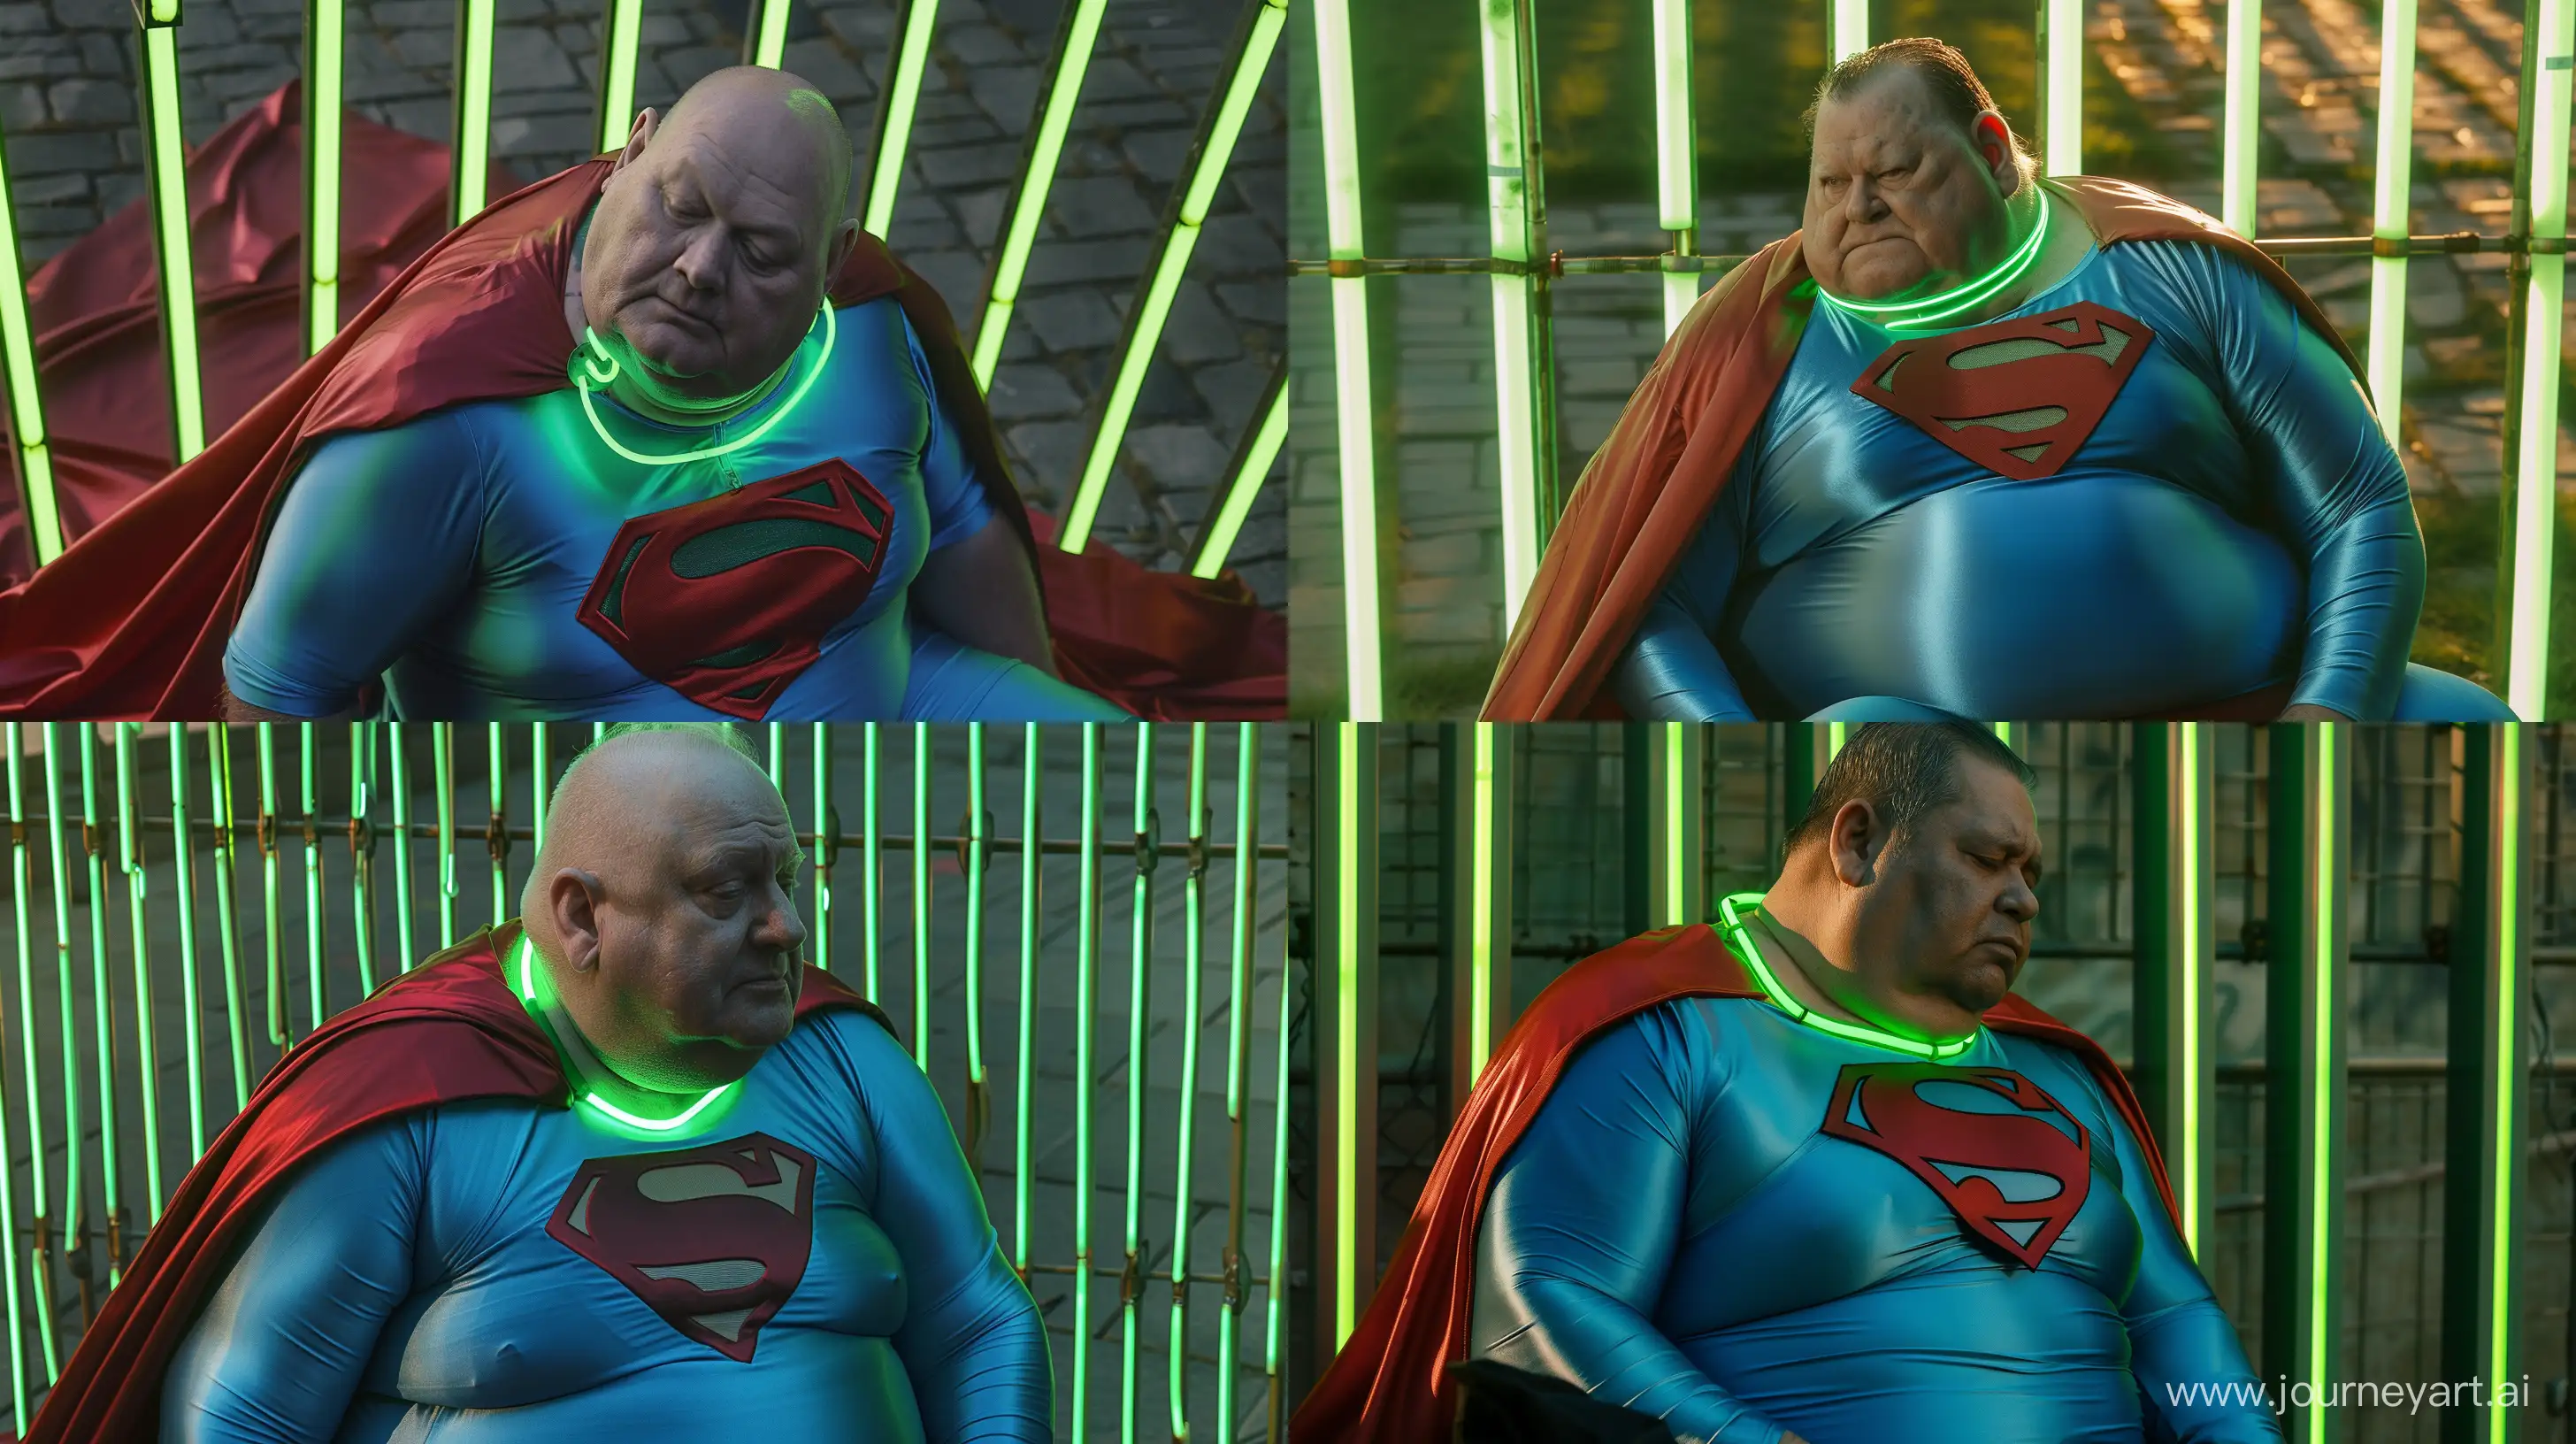 Elderly-Superman-Resting-Against-Glowing-Green-Bars